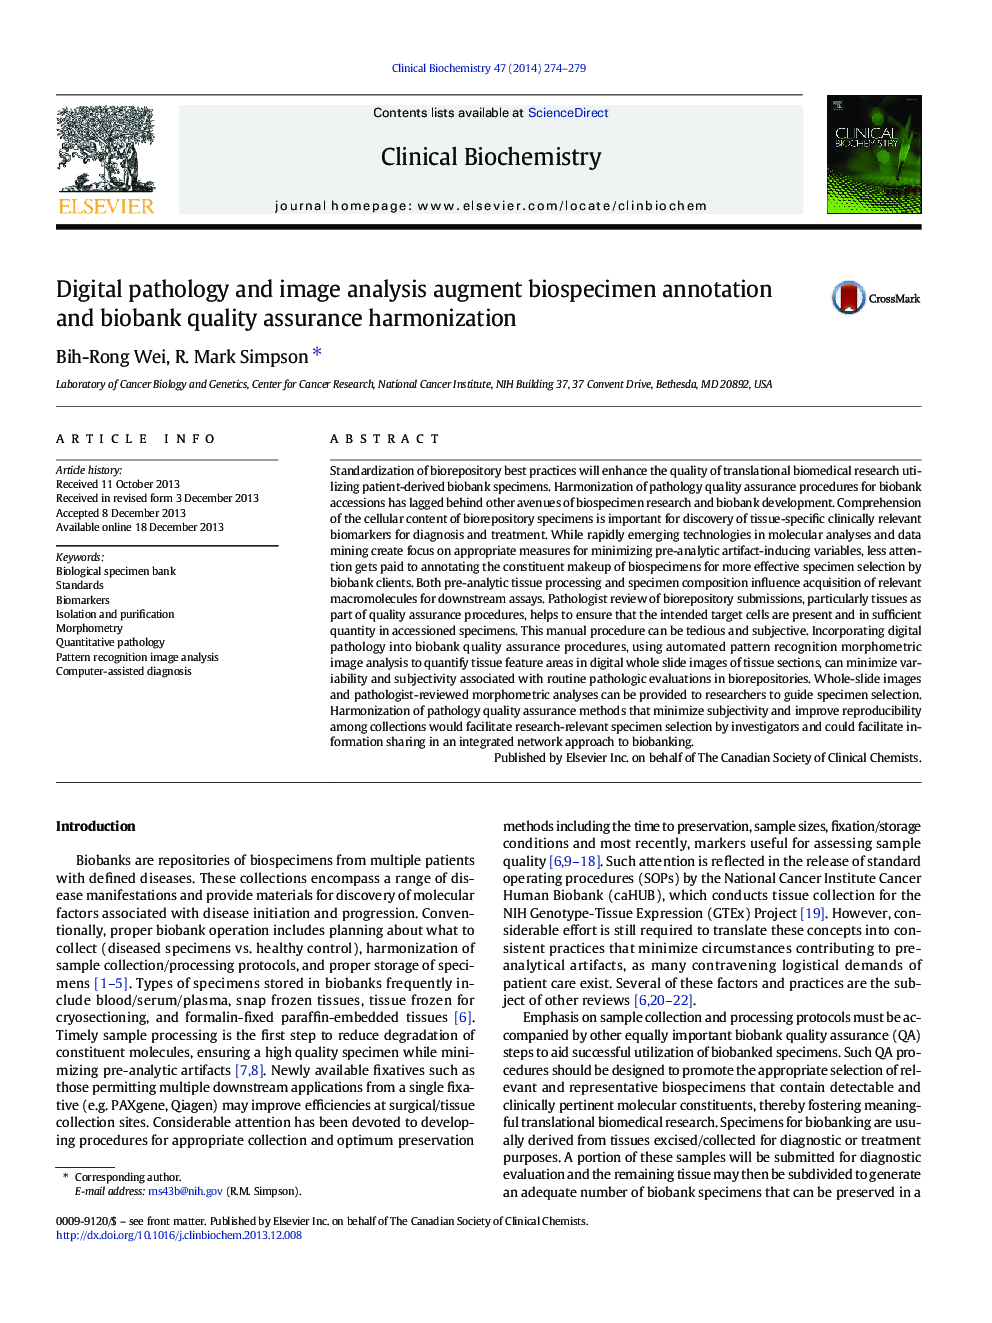 Digital pathology and image analysis augment biospecimen annotation and biobank quality assurance harmonization